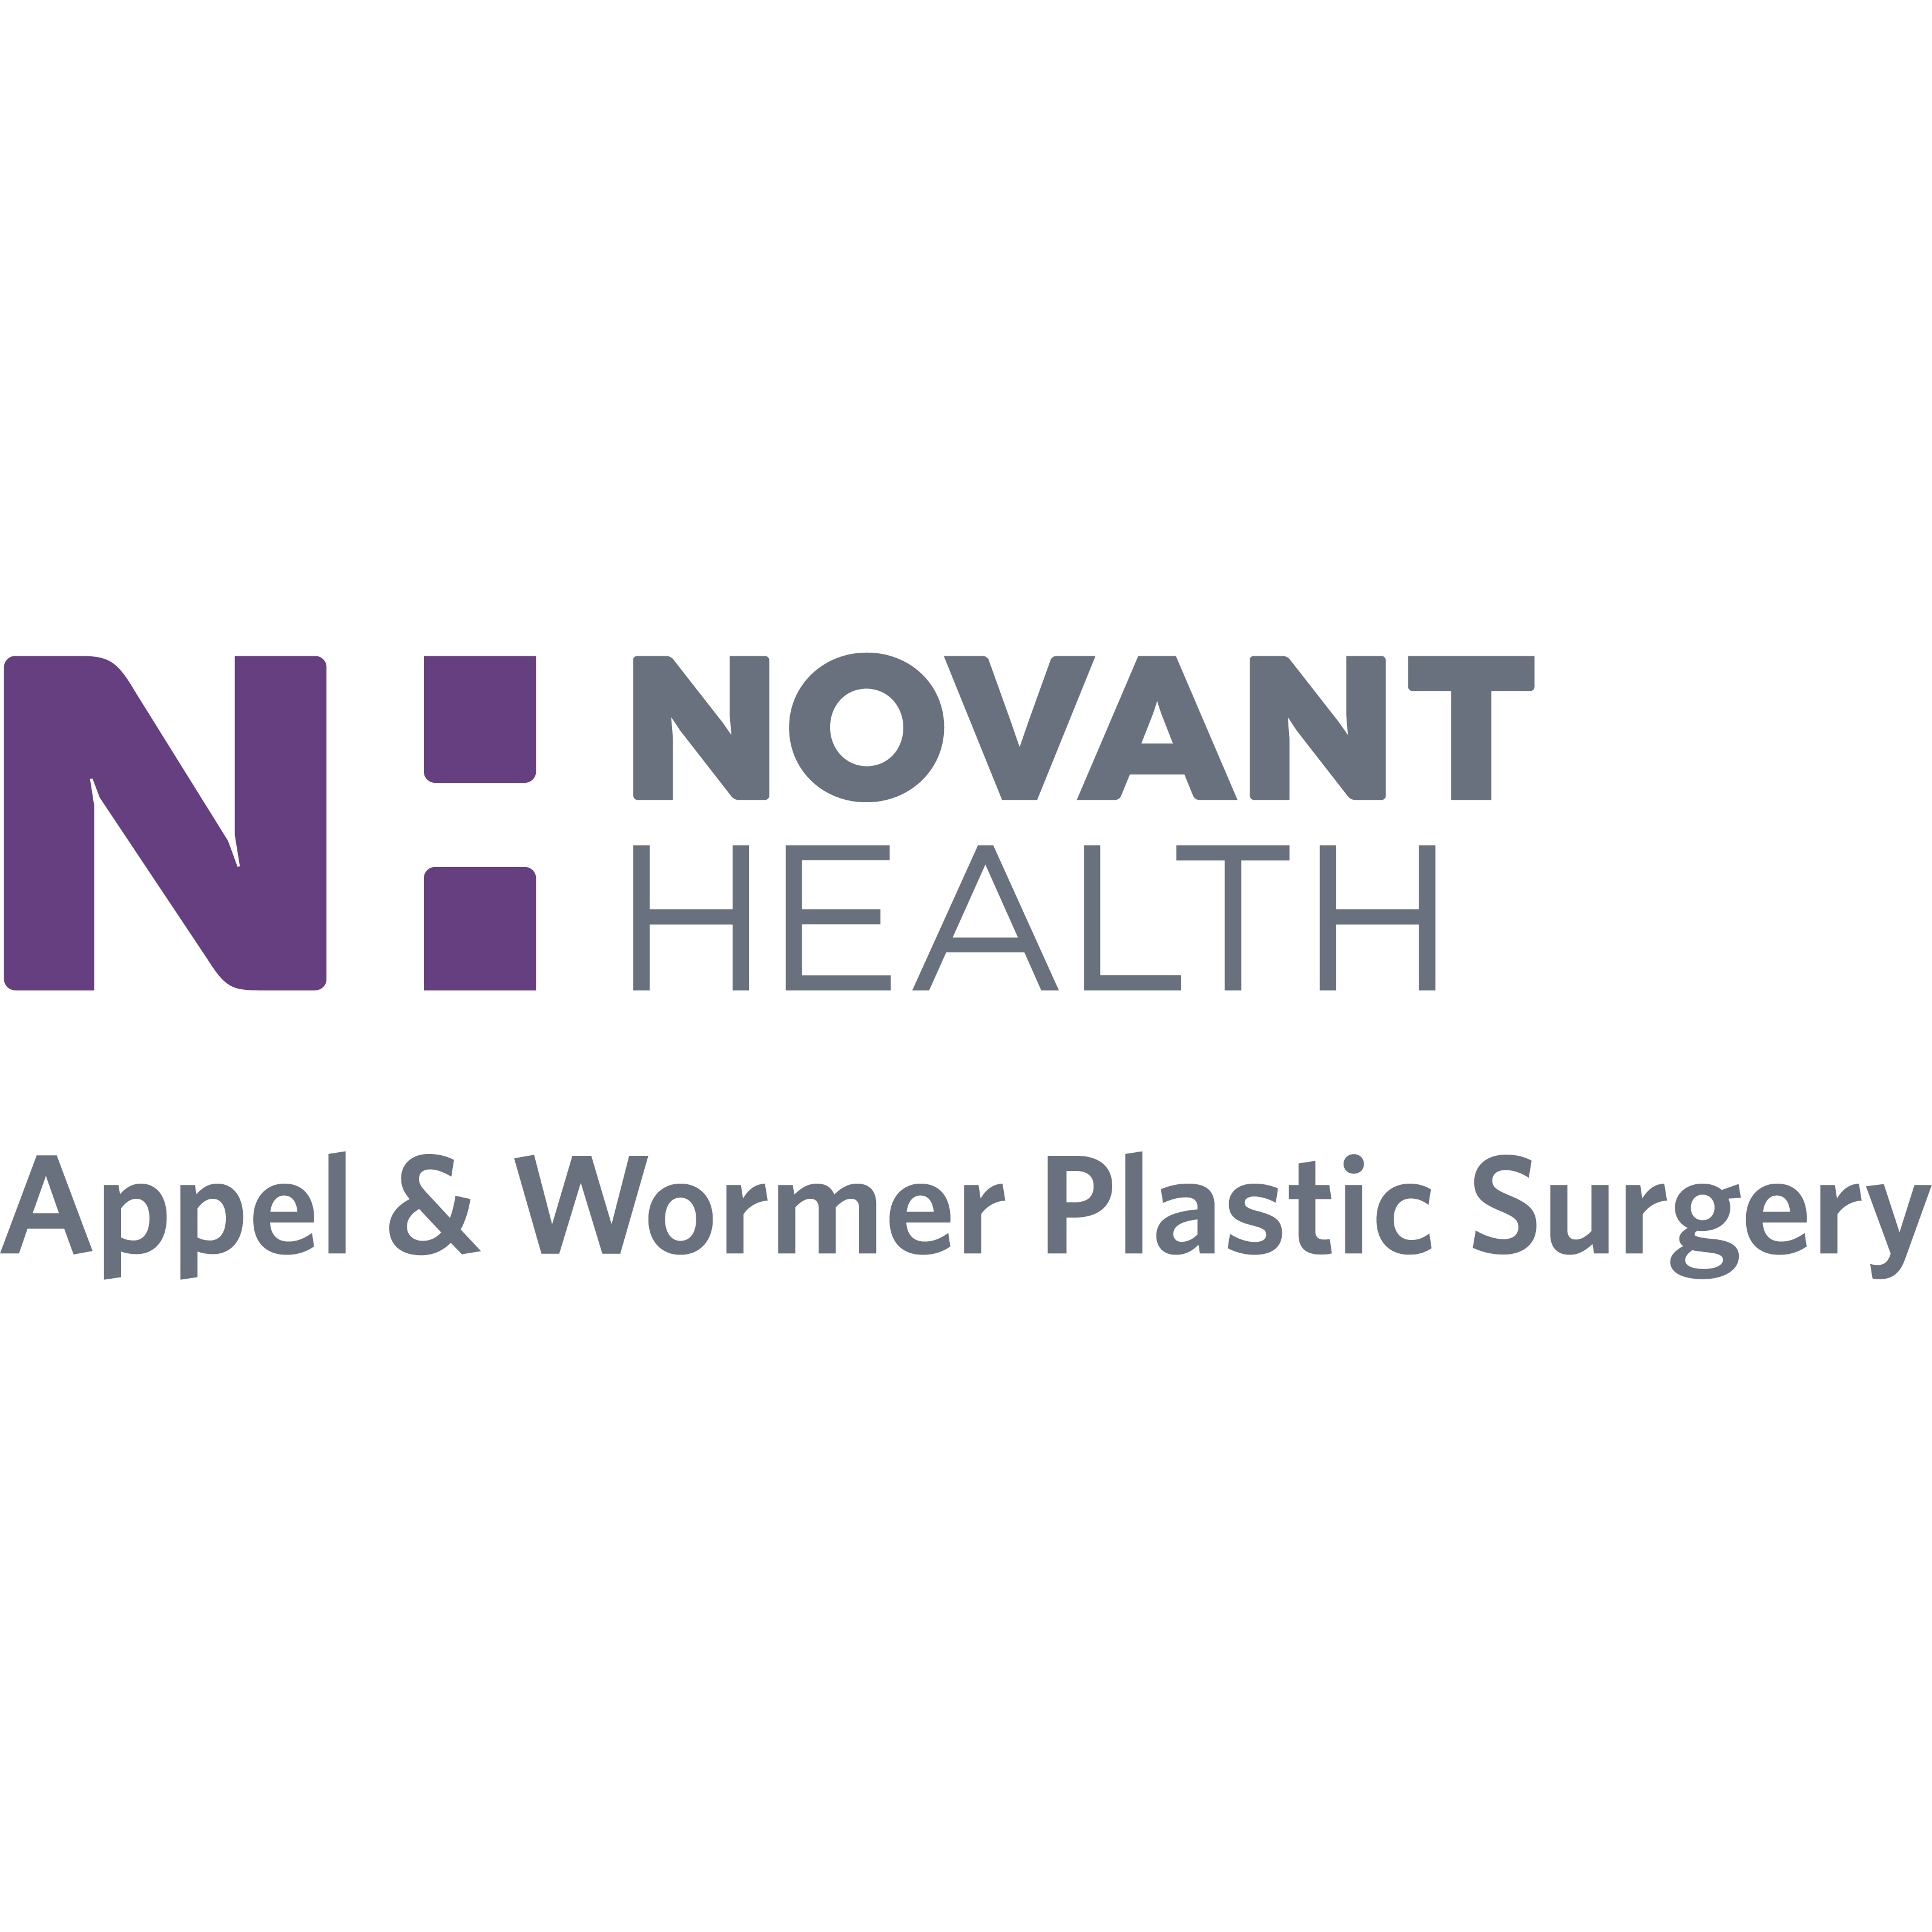 Novant Health Appel & Wormer Plastic Surgery